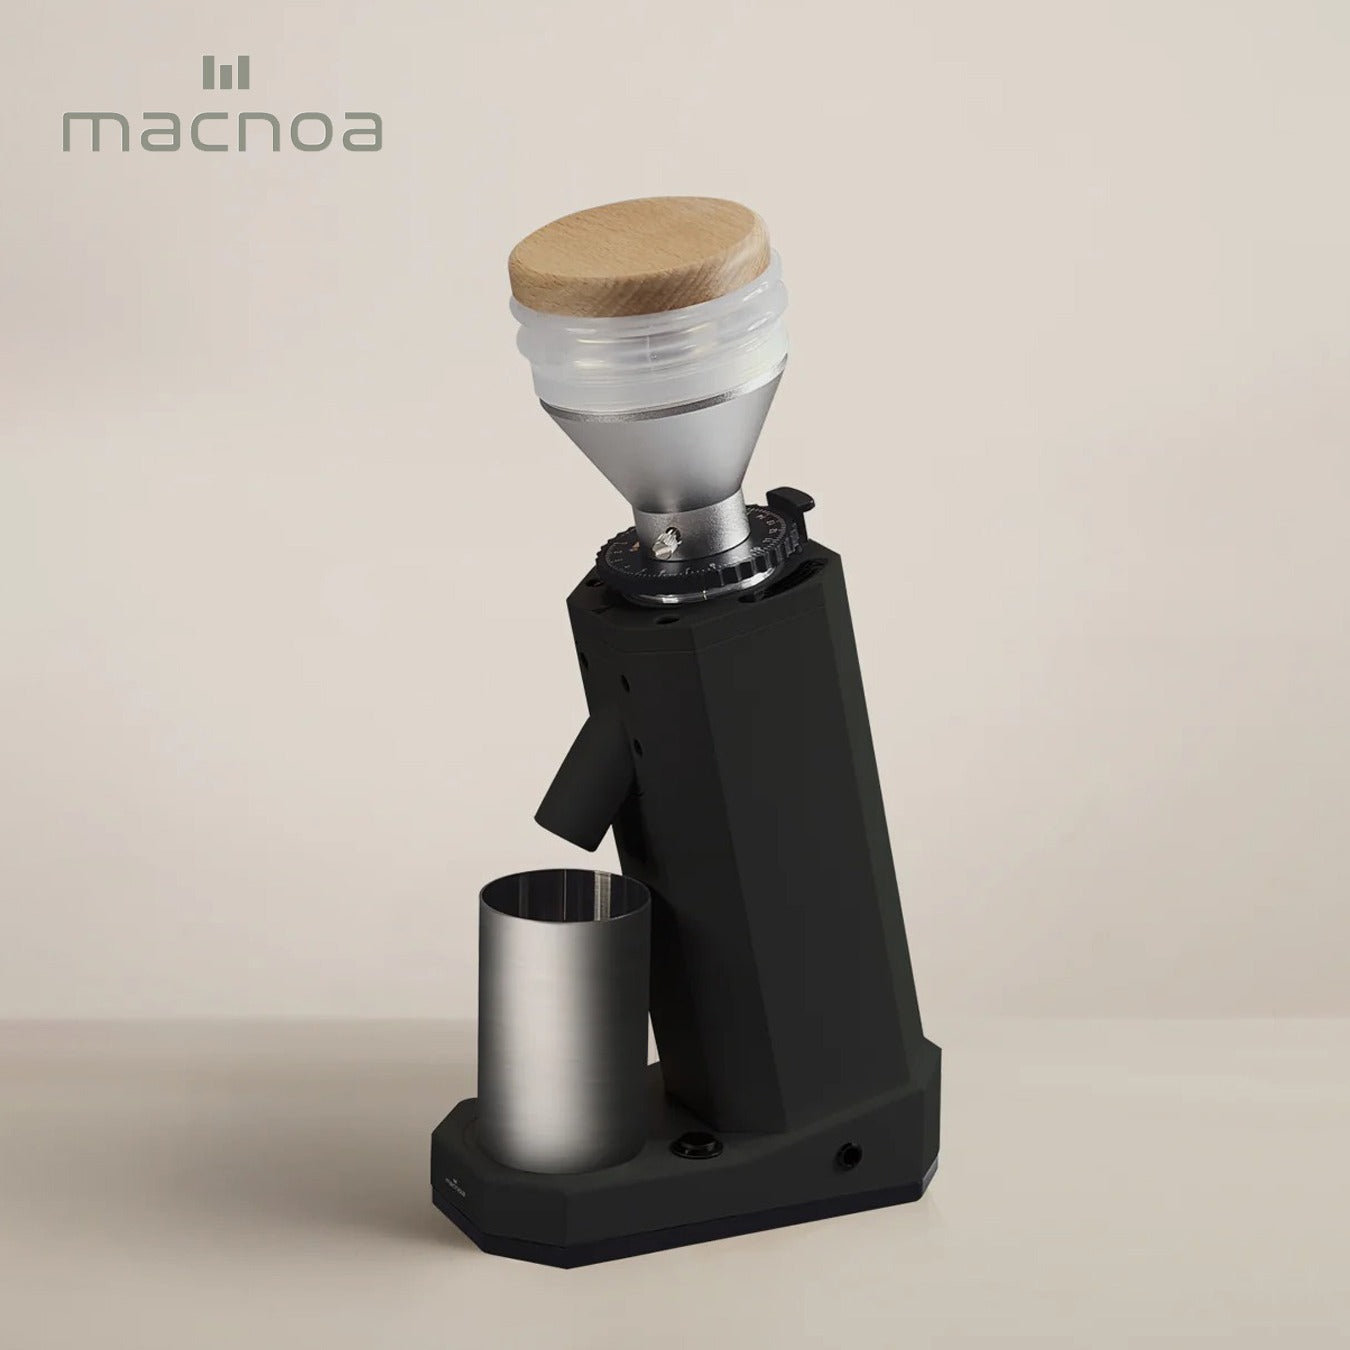 MACNOA Coffee Grinder, Titanium Burr with Optimal Control Over Grind Size